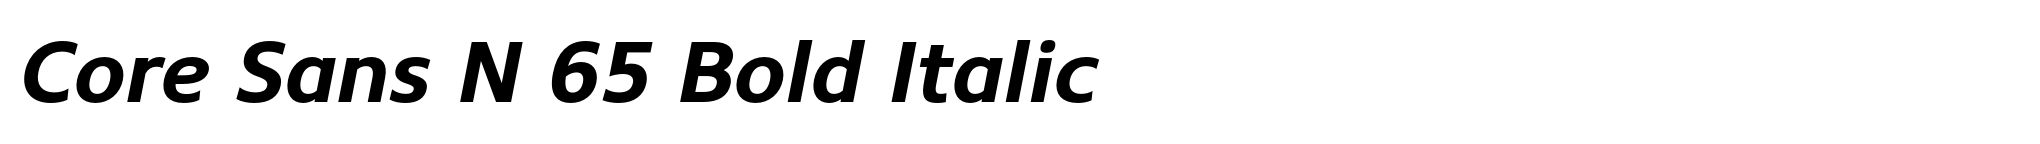 Core Sans N 65 Bold Italic image